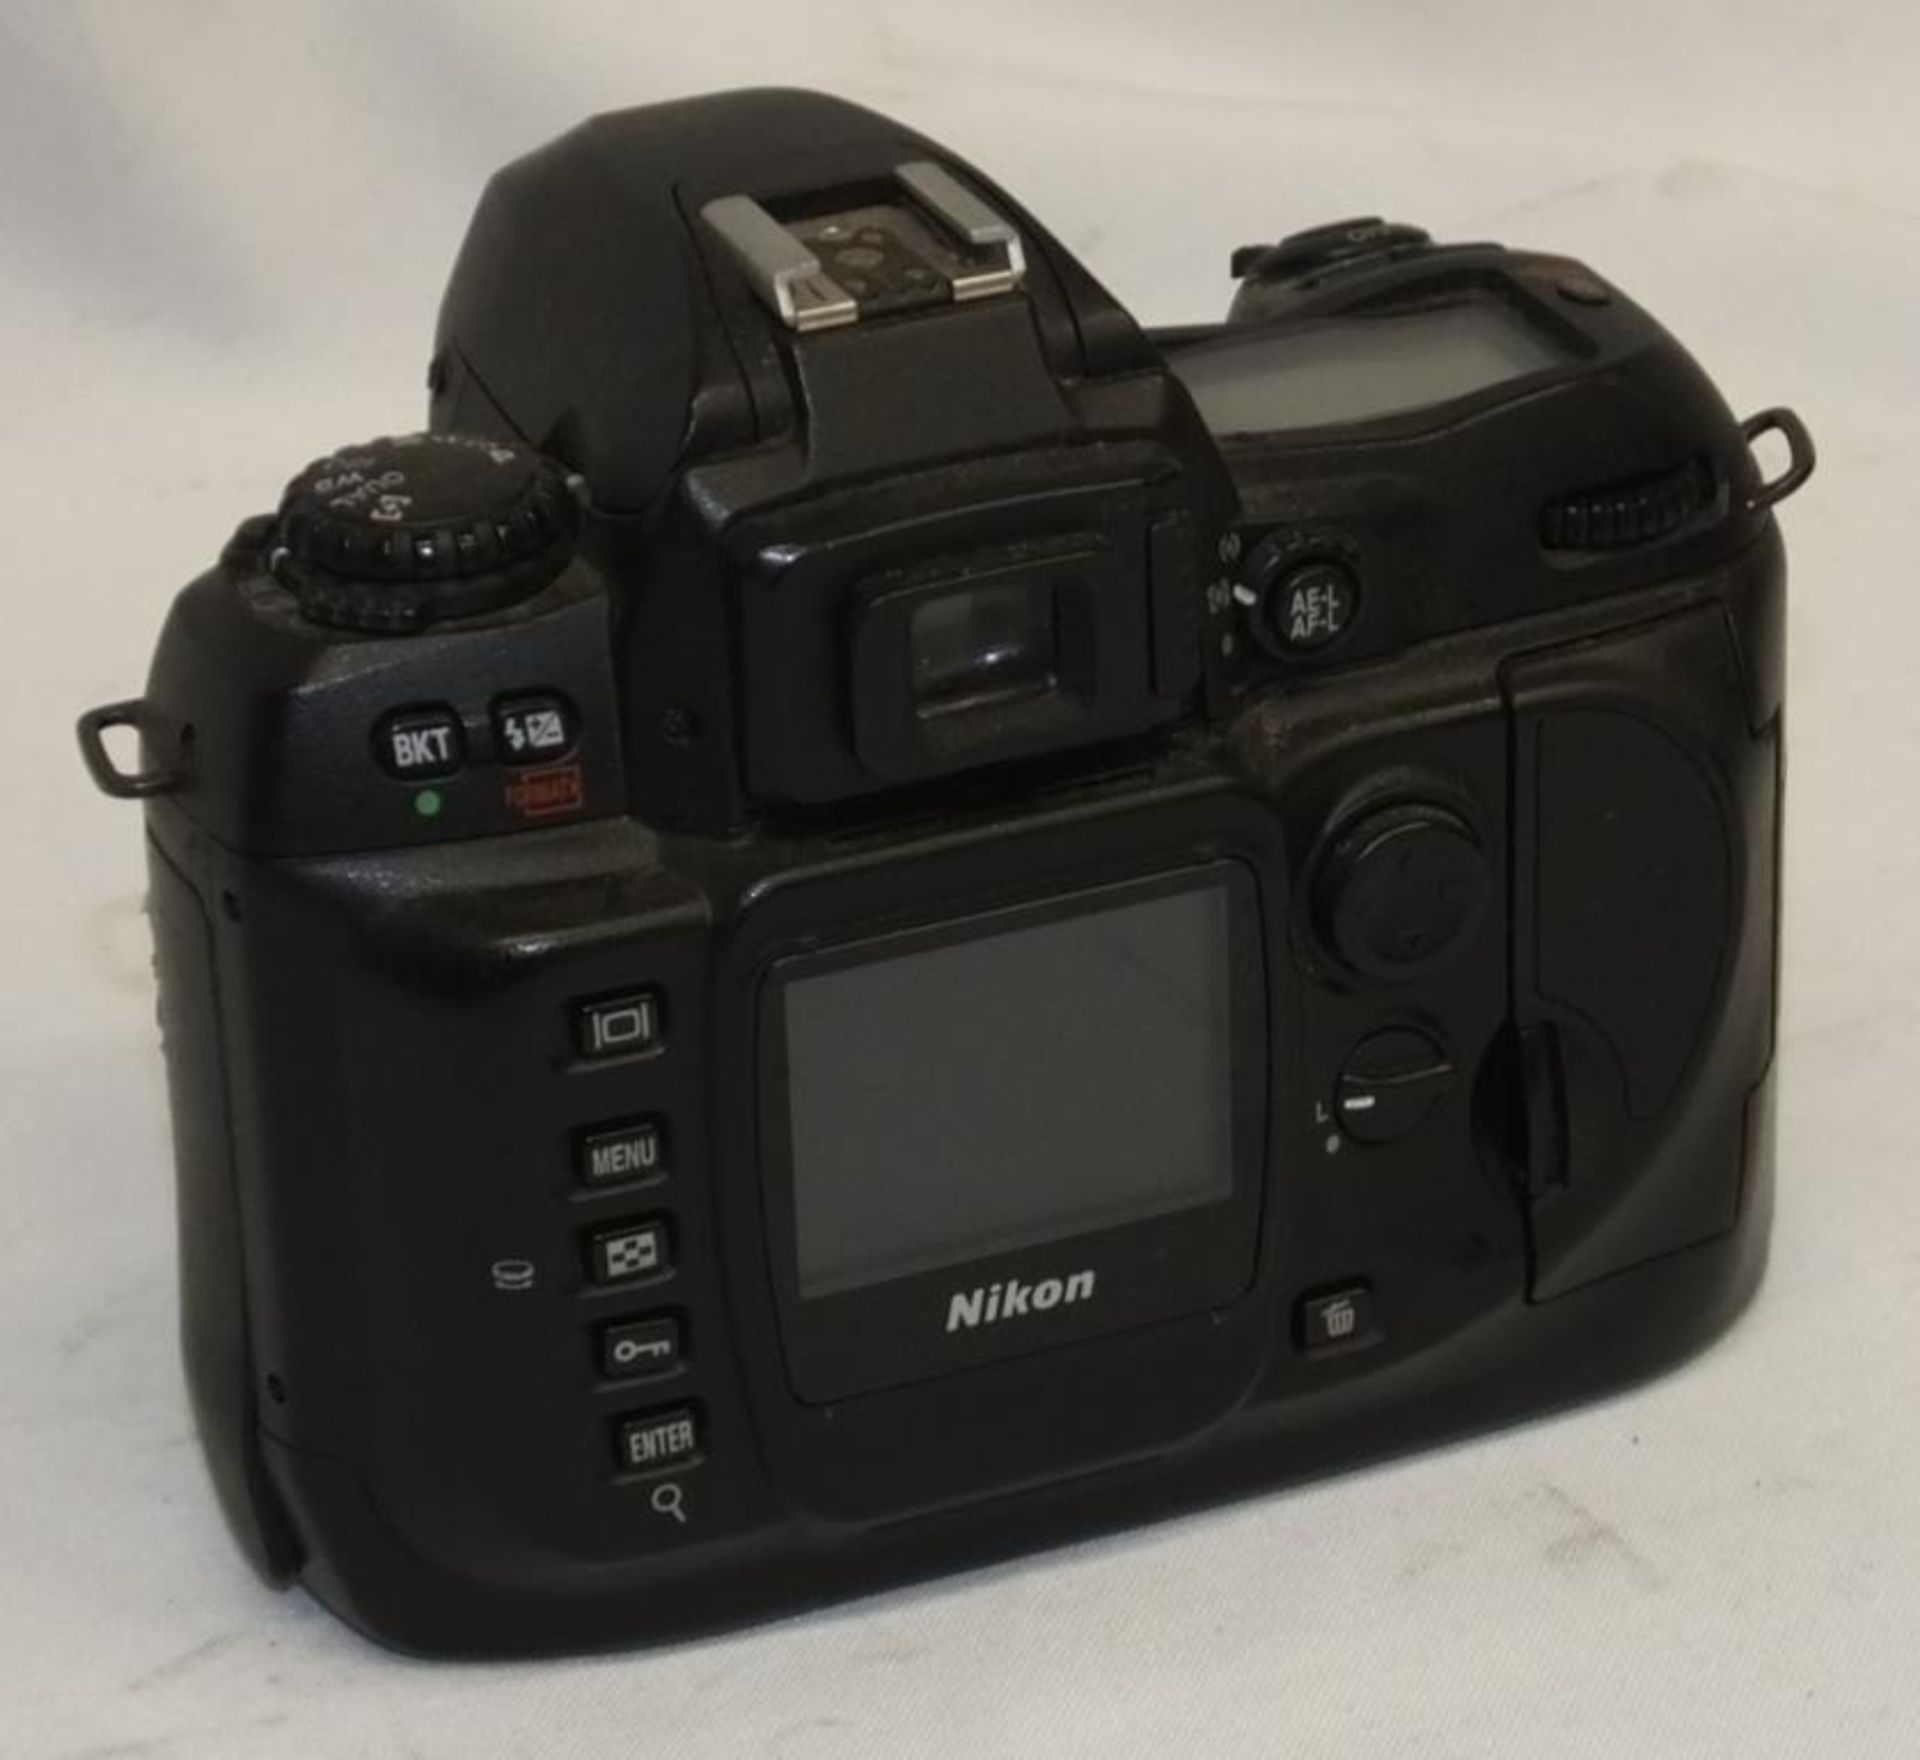 Nikon D100 camera body - serial 2268387 - no battery, no memory card - Image 3 of 4